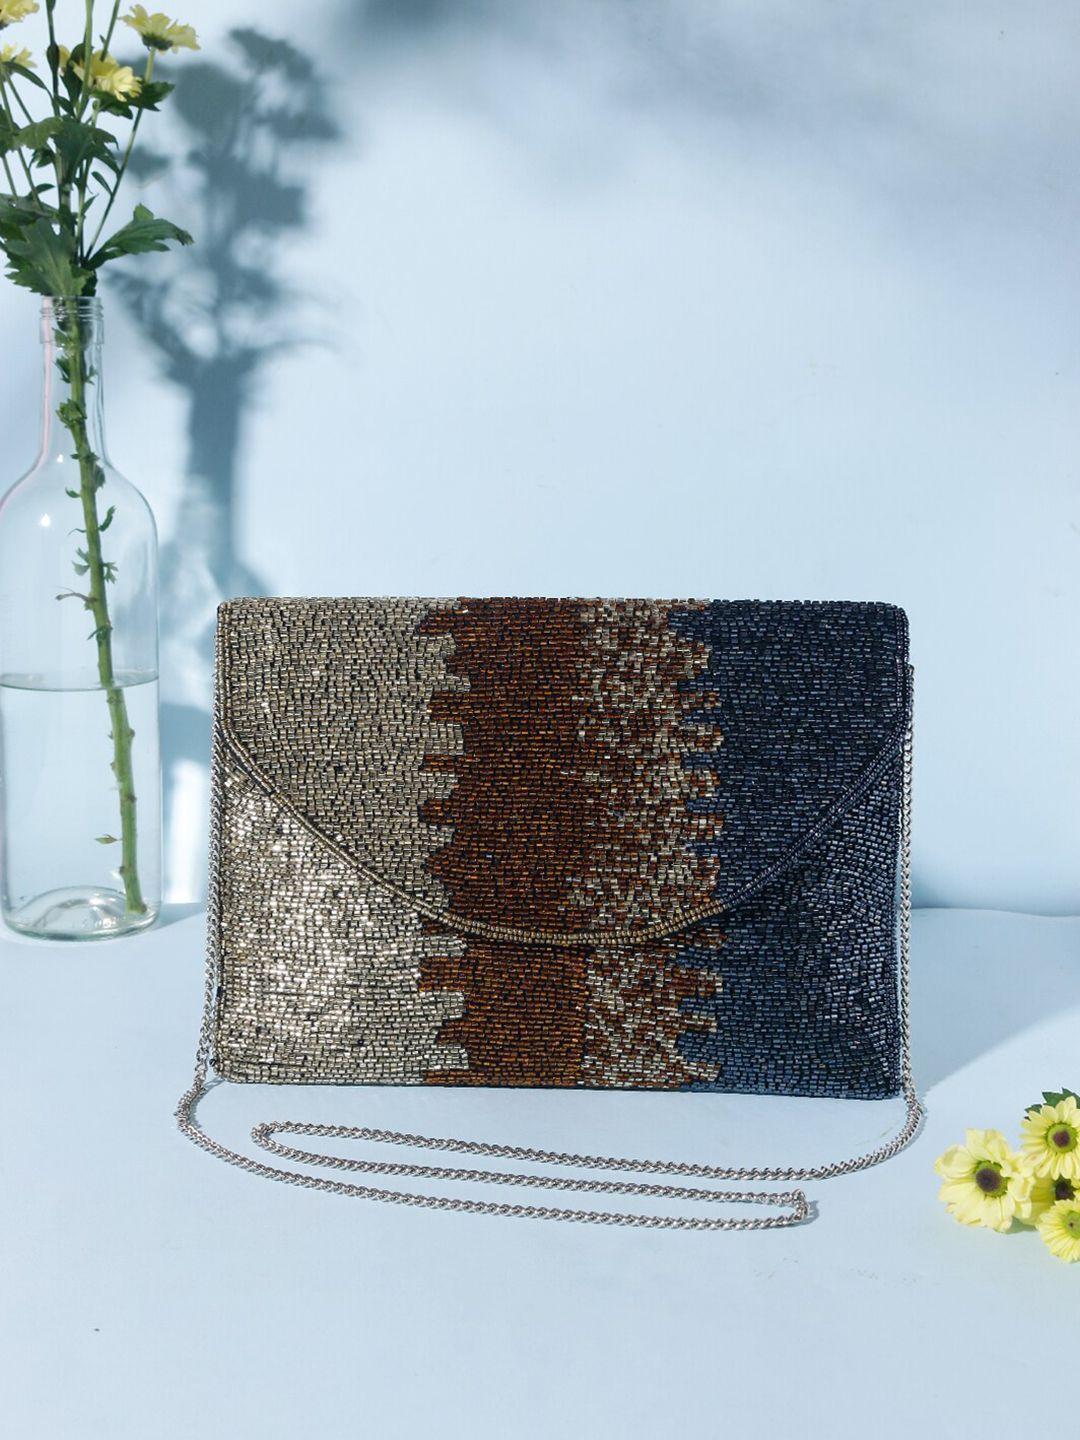 swisni brown & grey embellished purse clutch